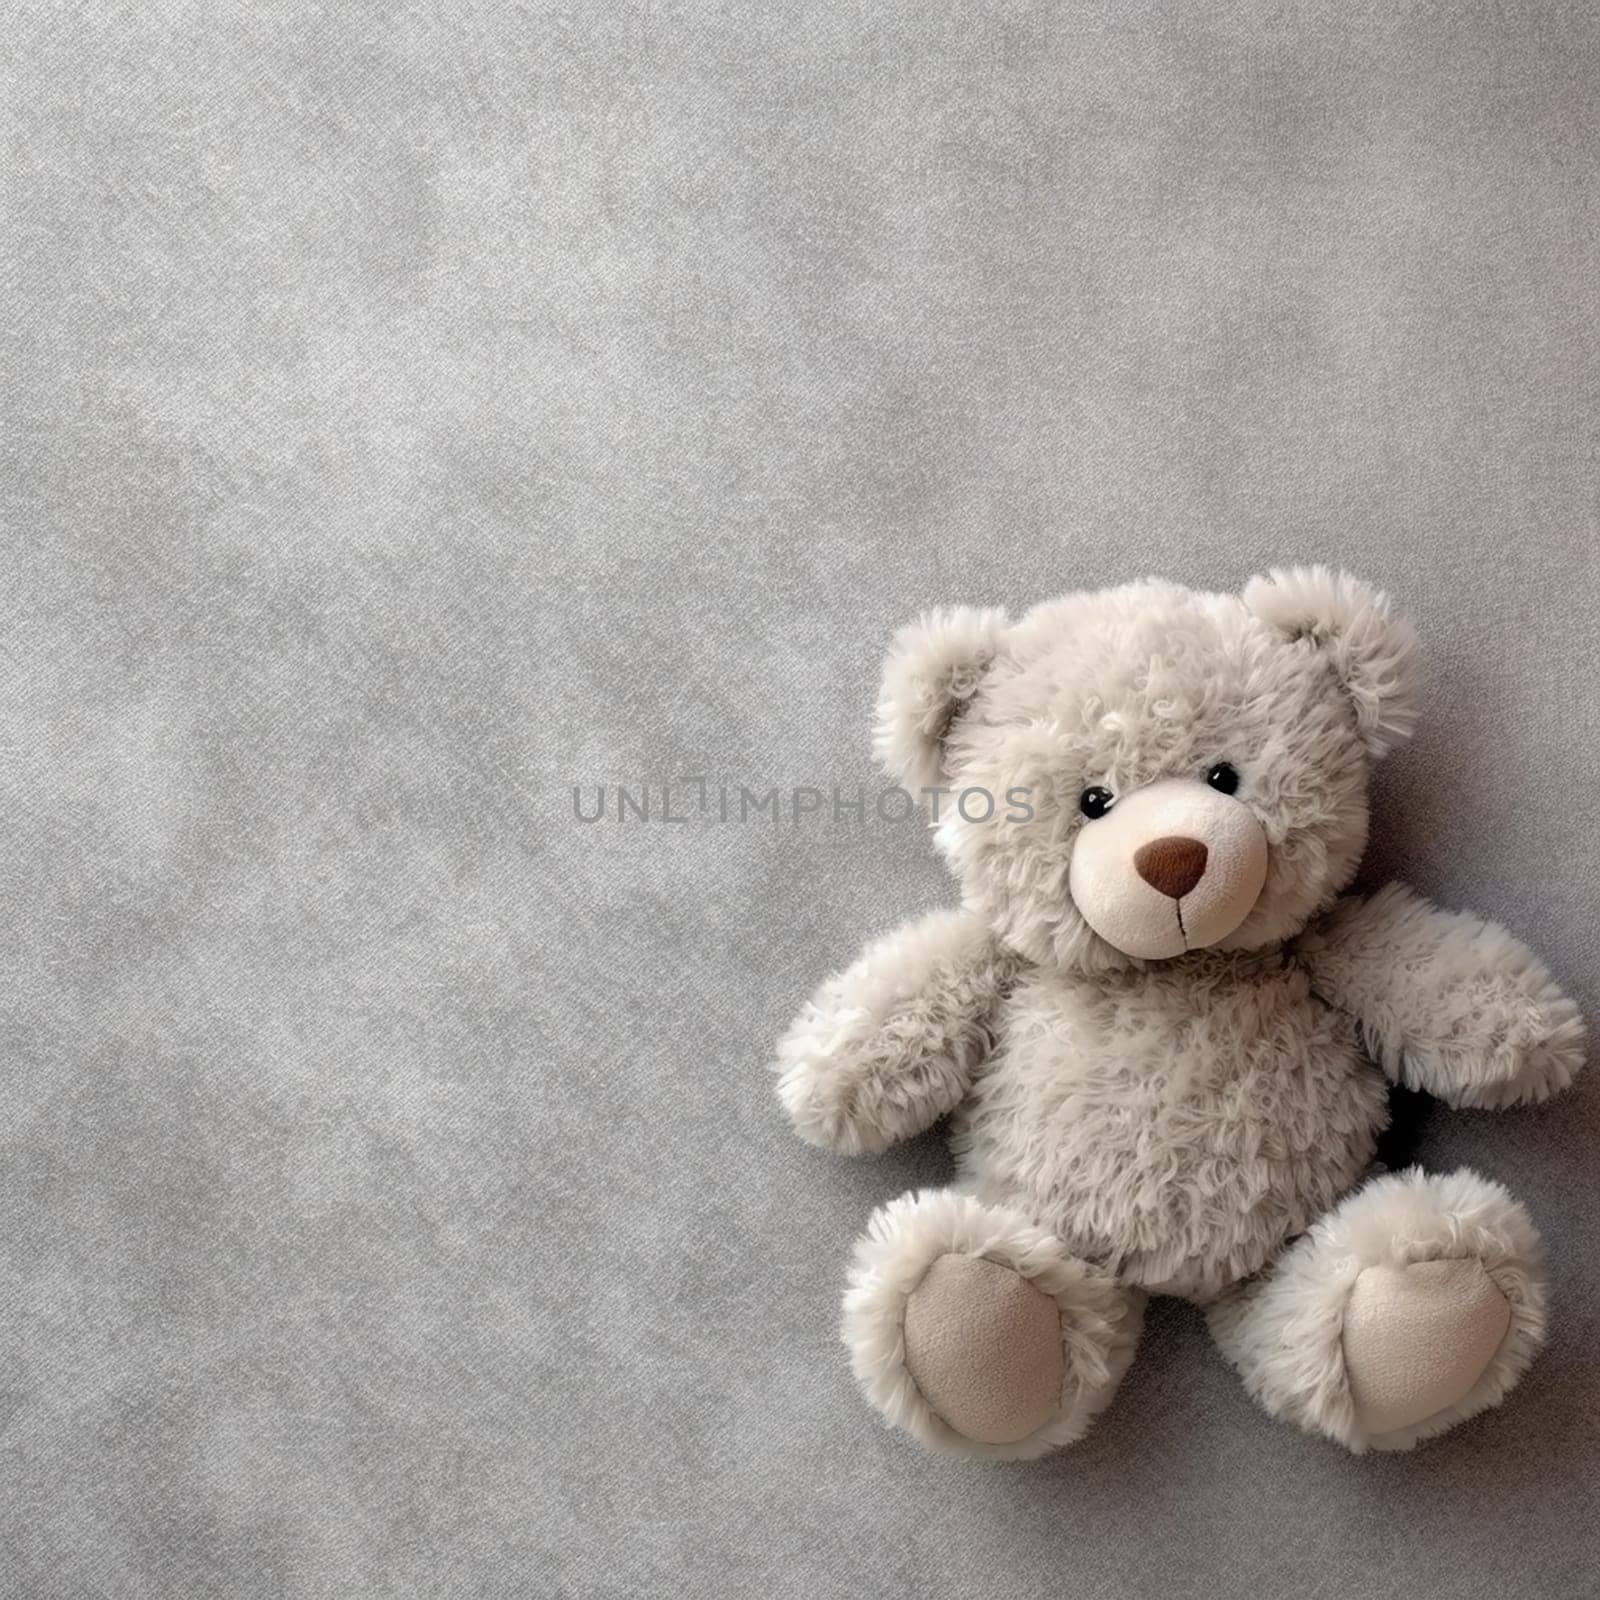 Plush teddy bear lying on a textured grey background.